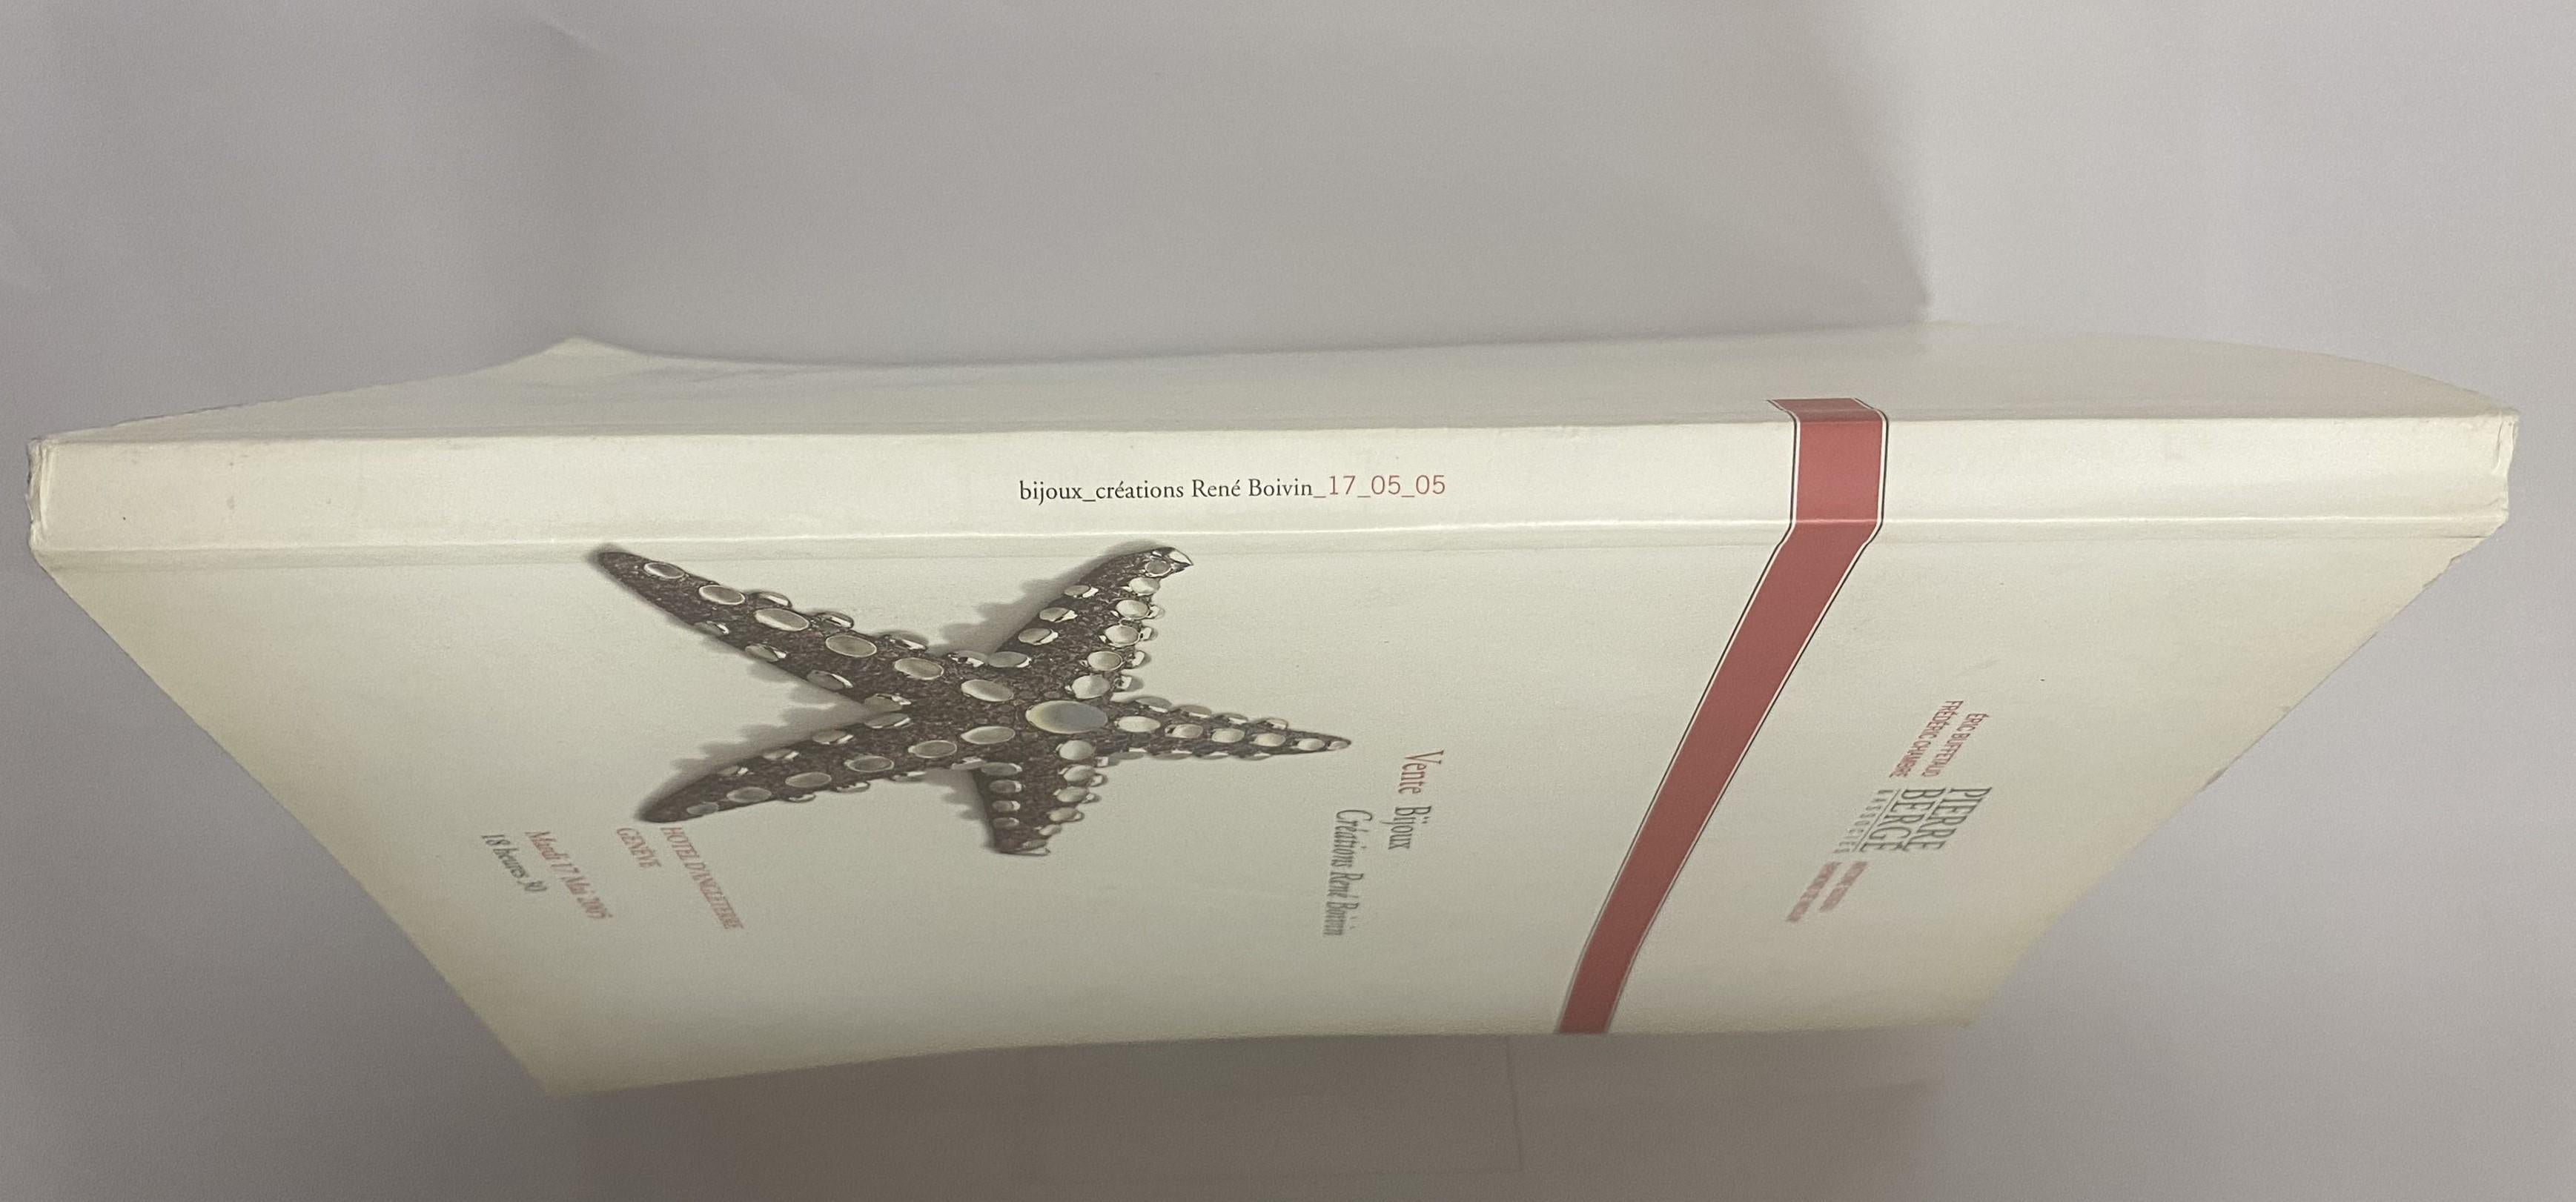 Vente Bijoux: Creations Rene Boivin (Book) For Sale 10